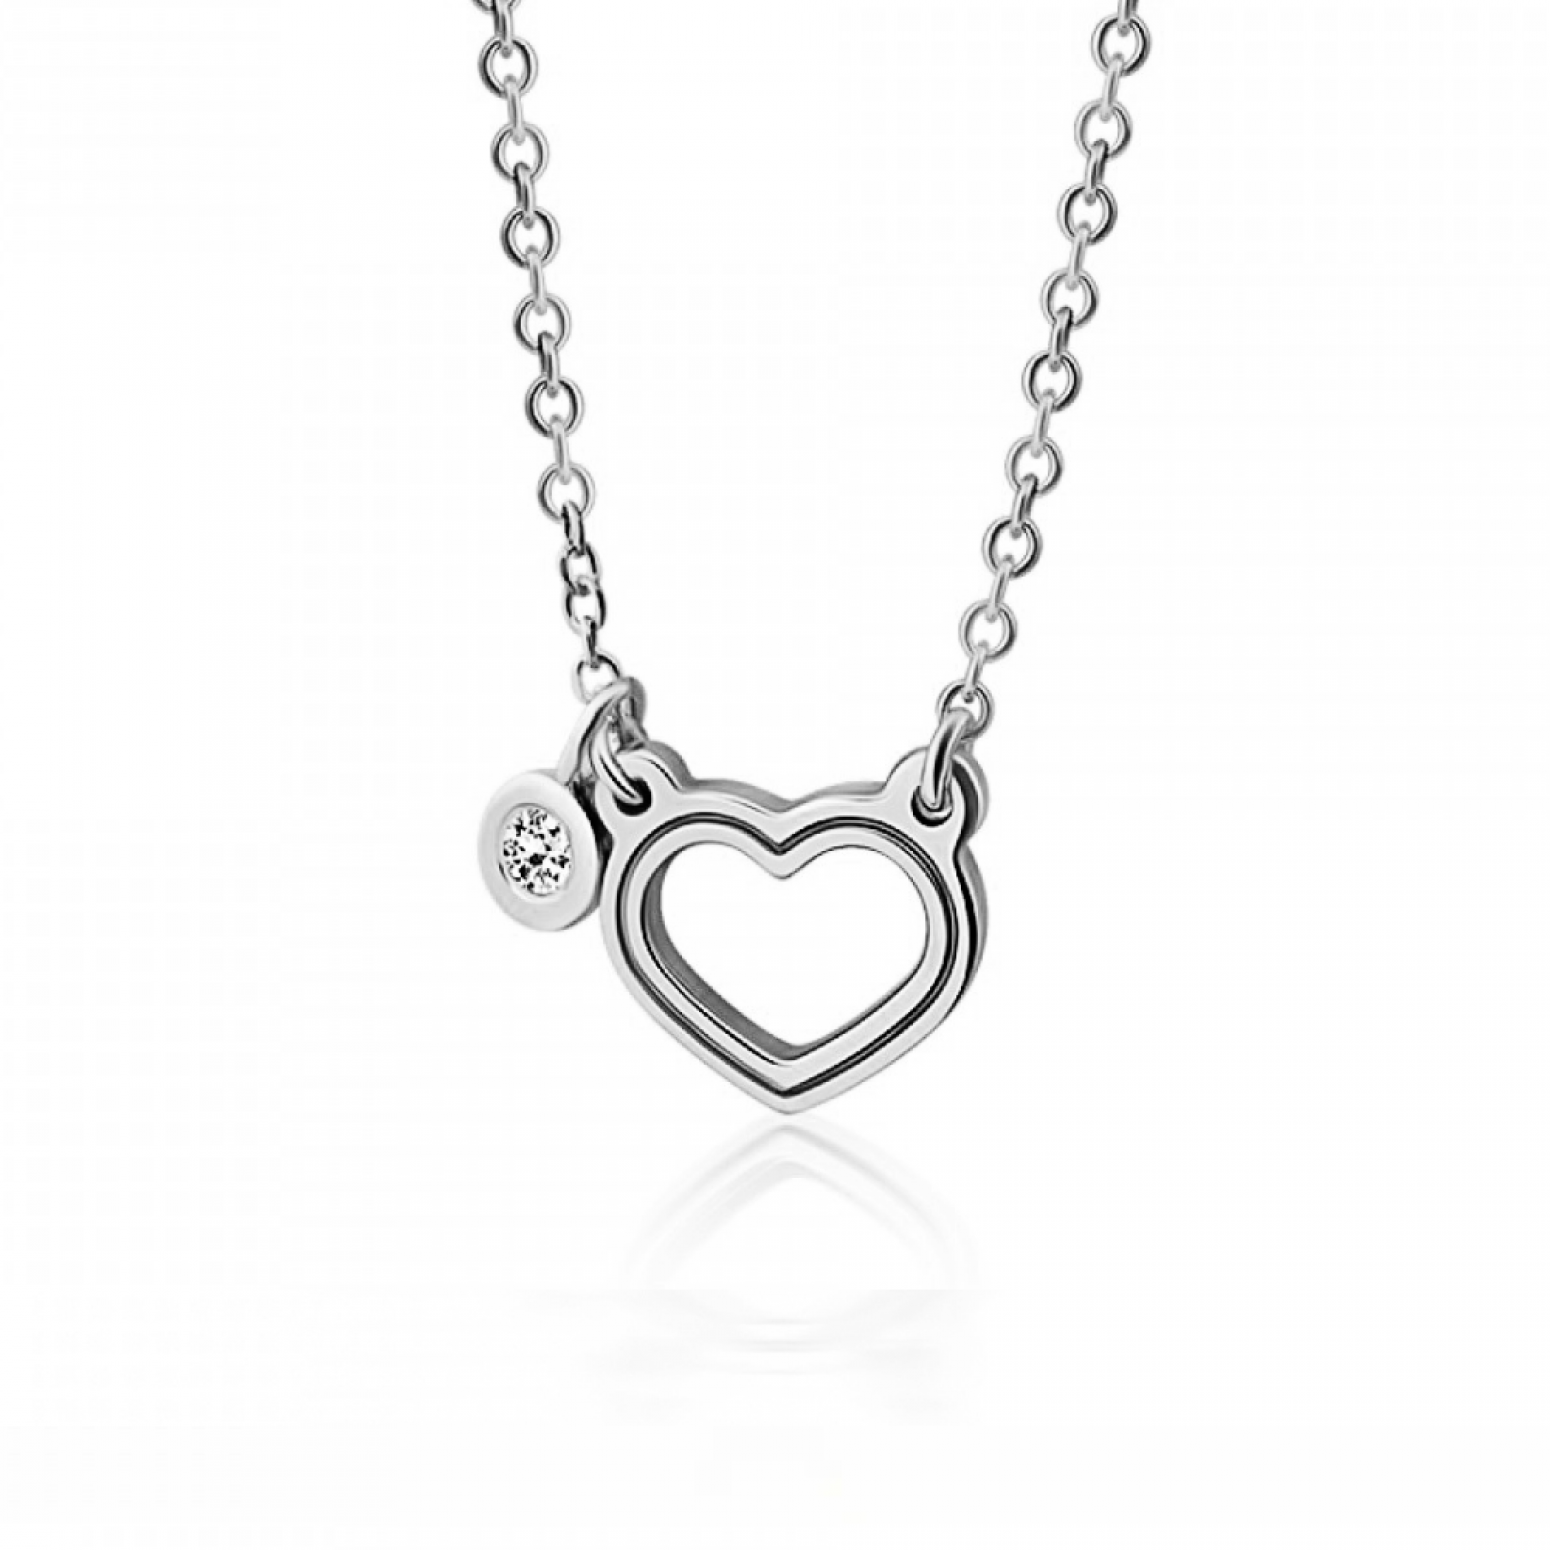 Heart necklace, Κ14 white gold with diamond 0.02ct, VS2, H ko5318 NECKLACES Κοσμηματα - chrilia.gr